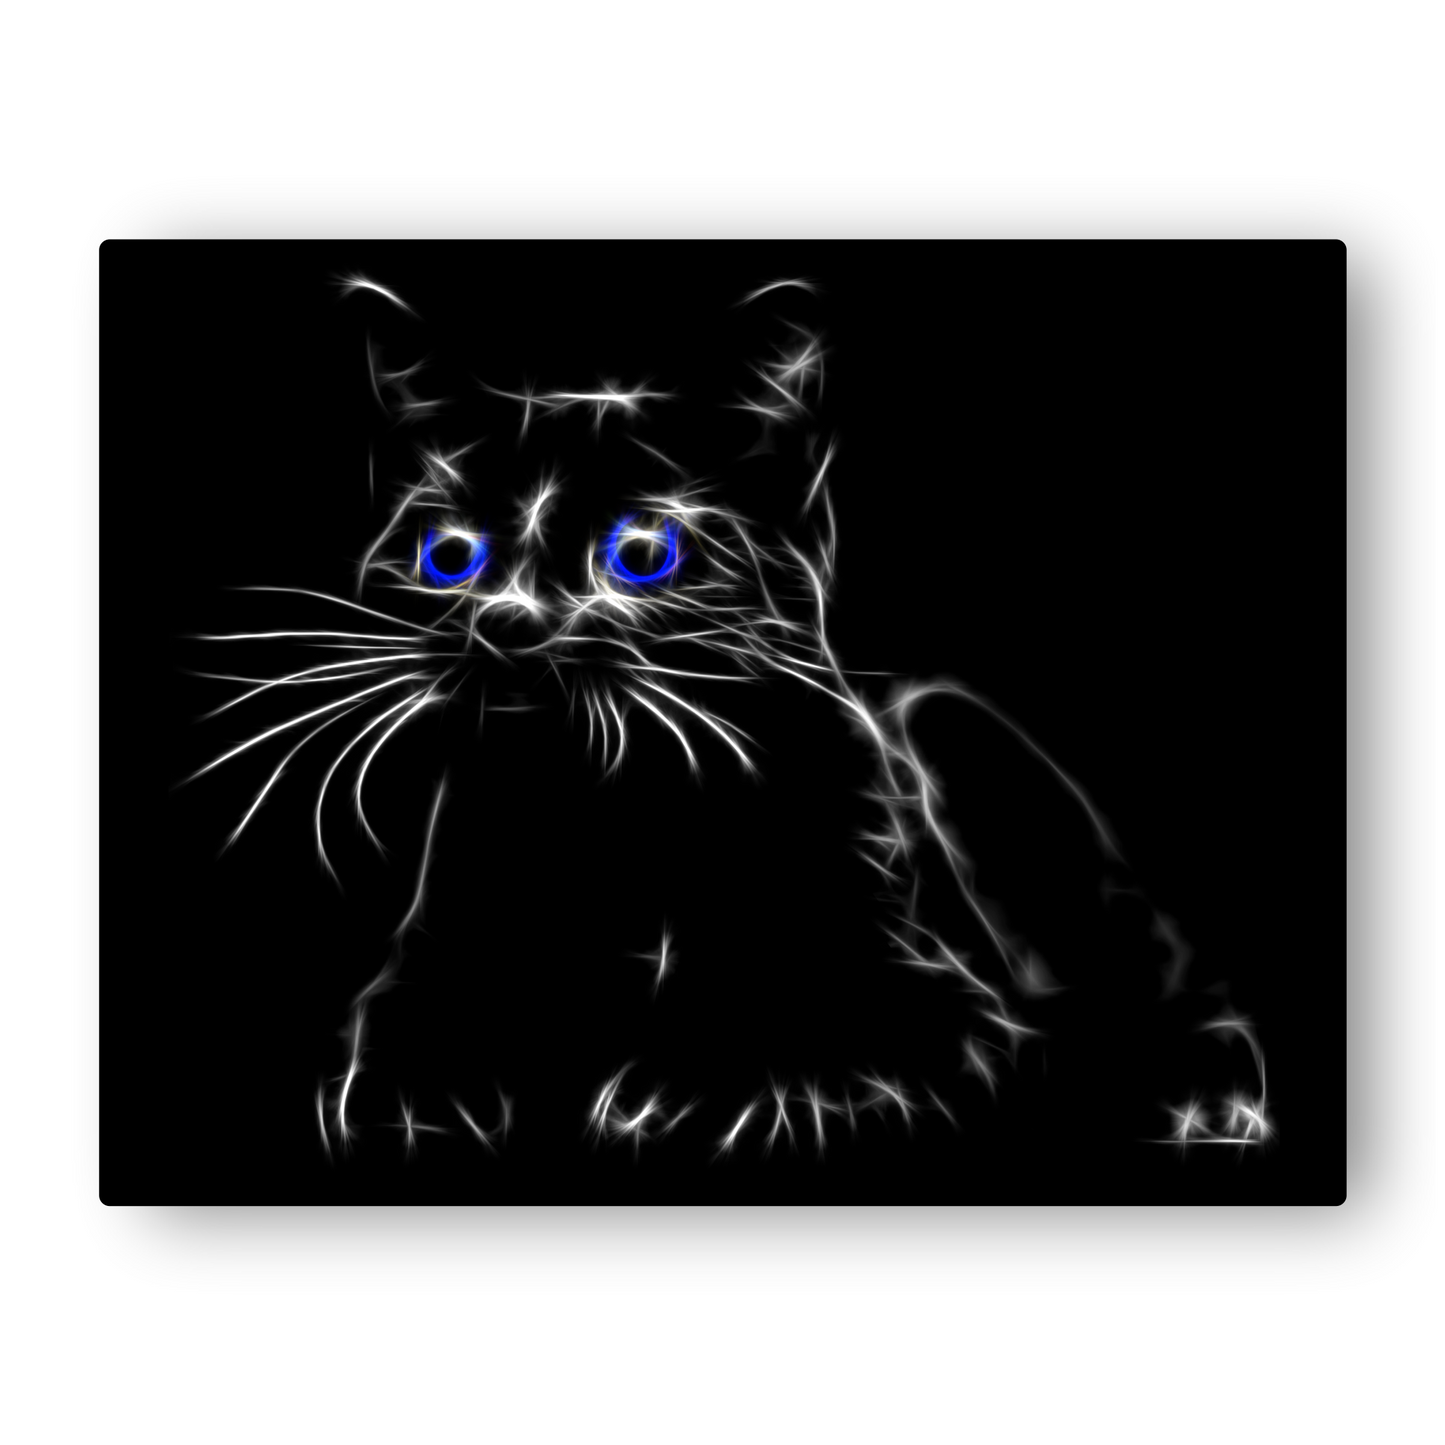 Blue Eye Black Cat Aluminium Metal Wall Plaque